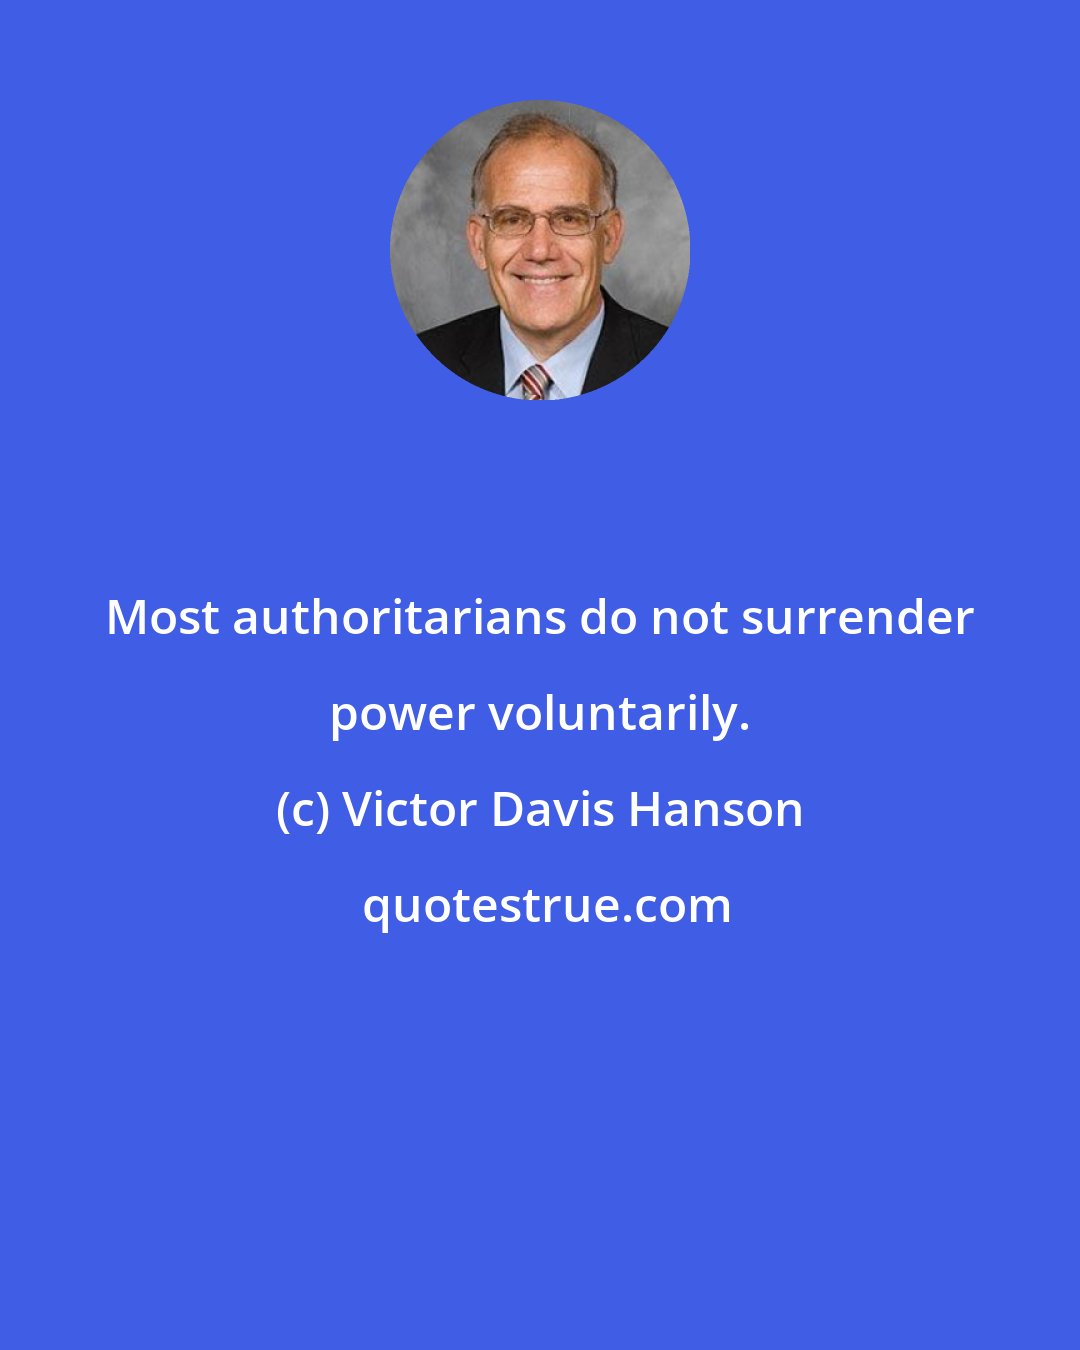 Victor Davis Hanson: Most authoritarians do not surrender power voluntarily.